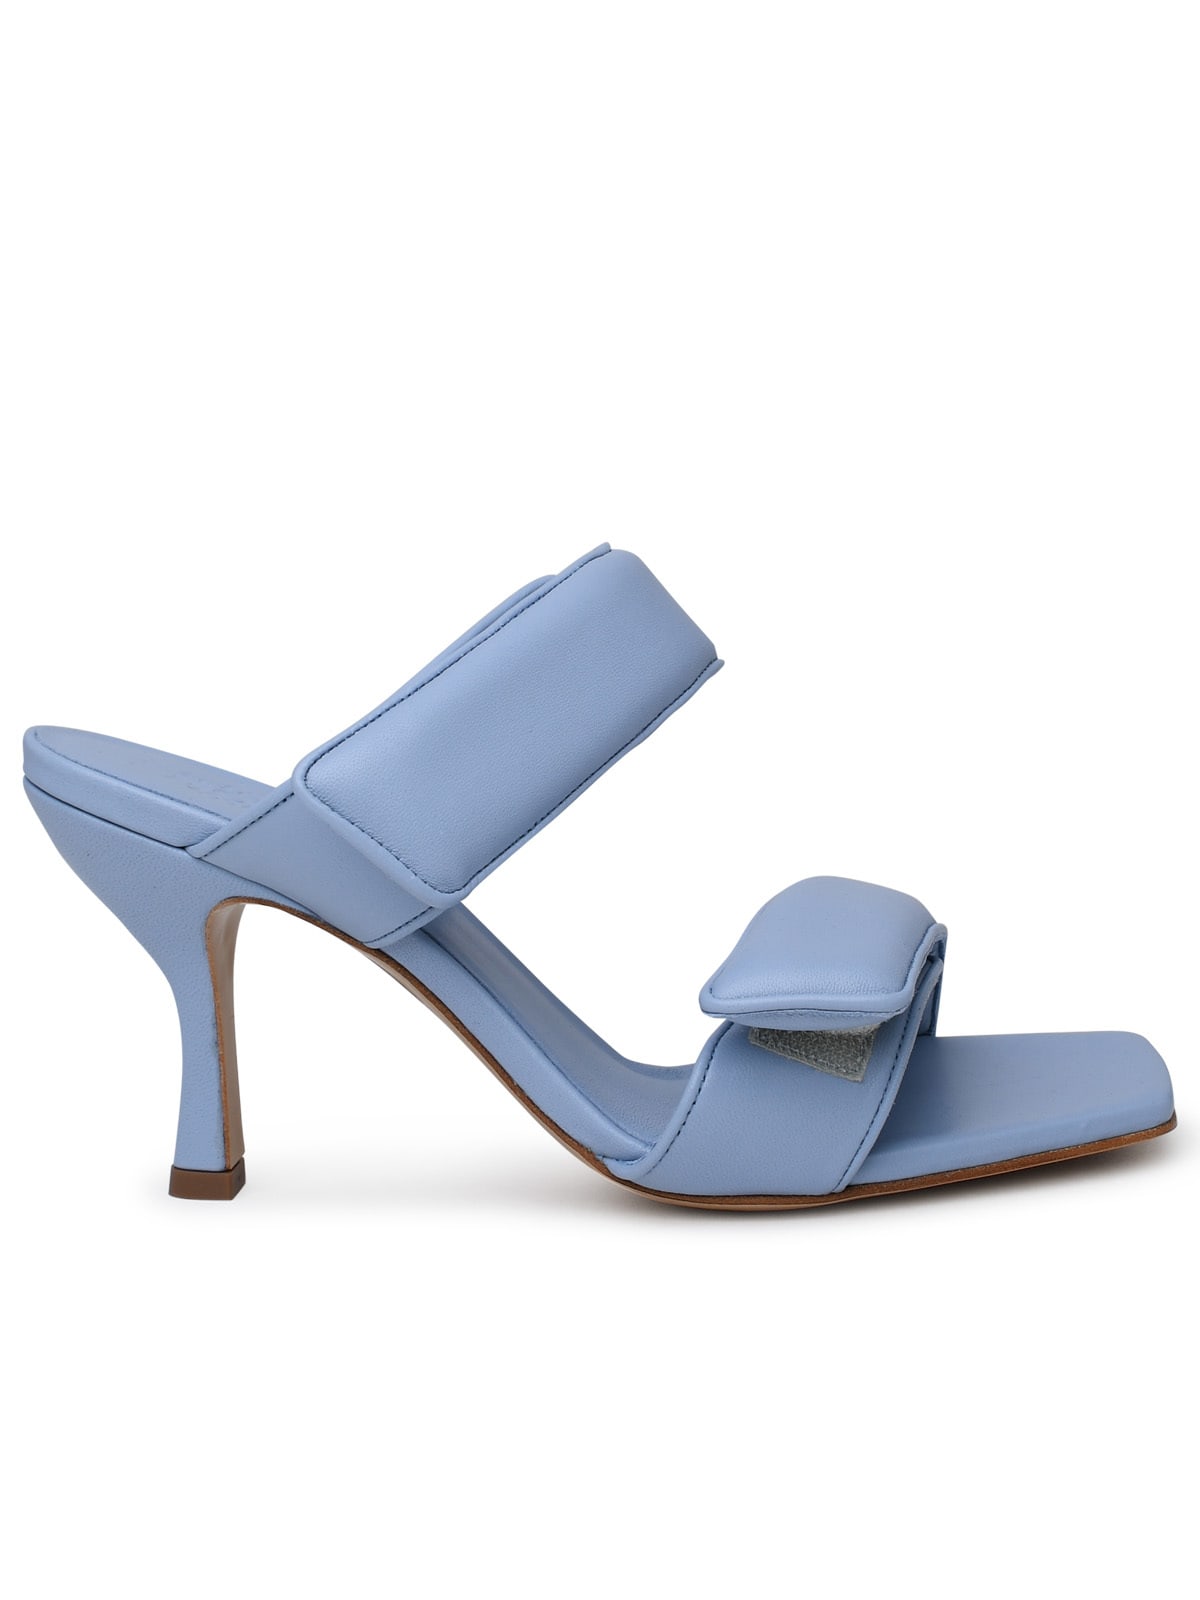 Gia X Pernille Teisbaek Azure Leather Perni 03 Sandals